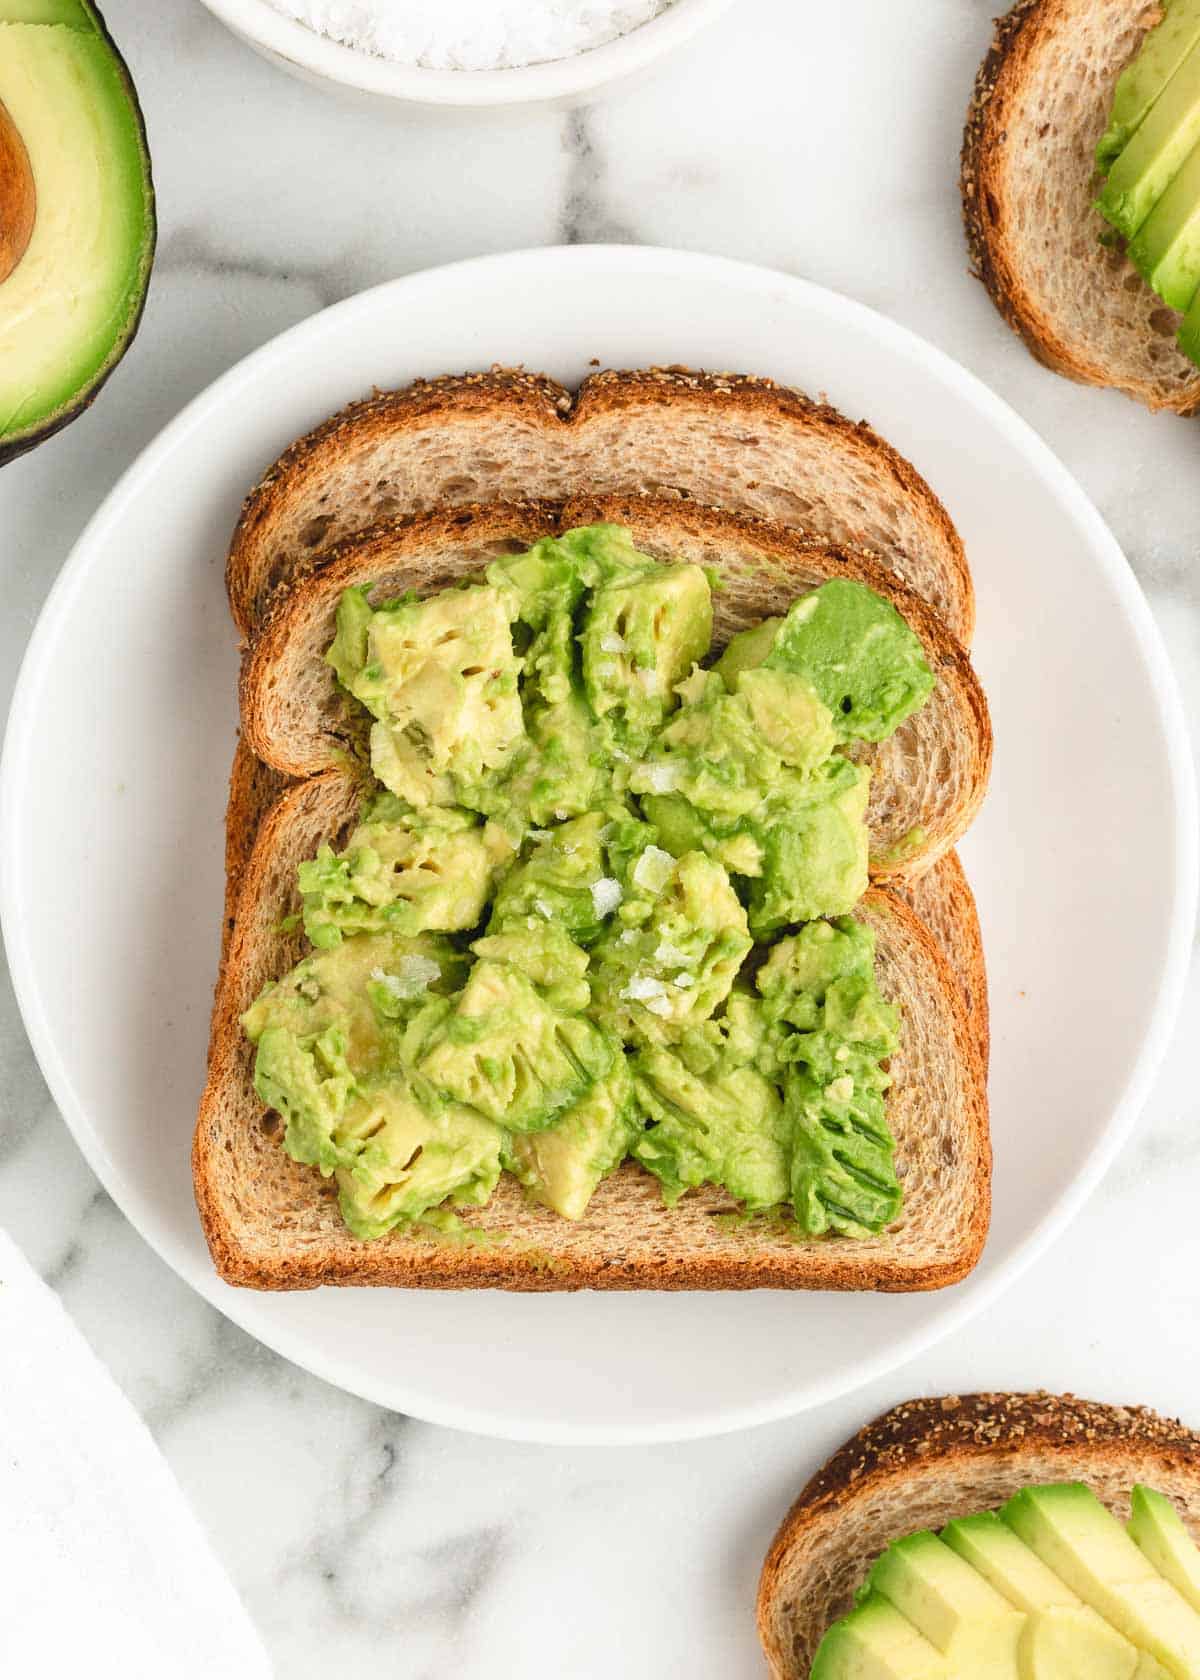 https://www.iheartnaptime.net/wp-content/uploads/2021/03/how-to-make-avocado-toast-3.jpg